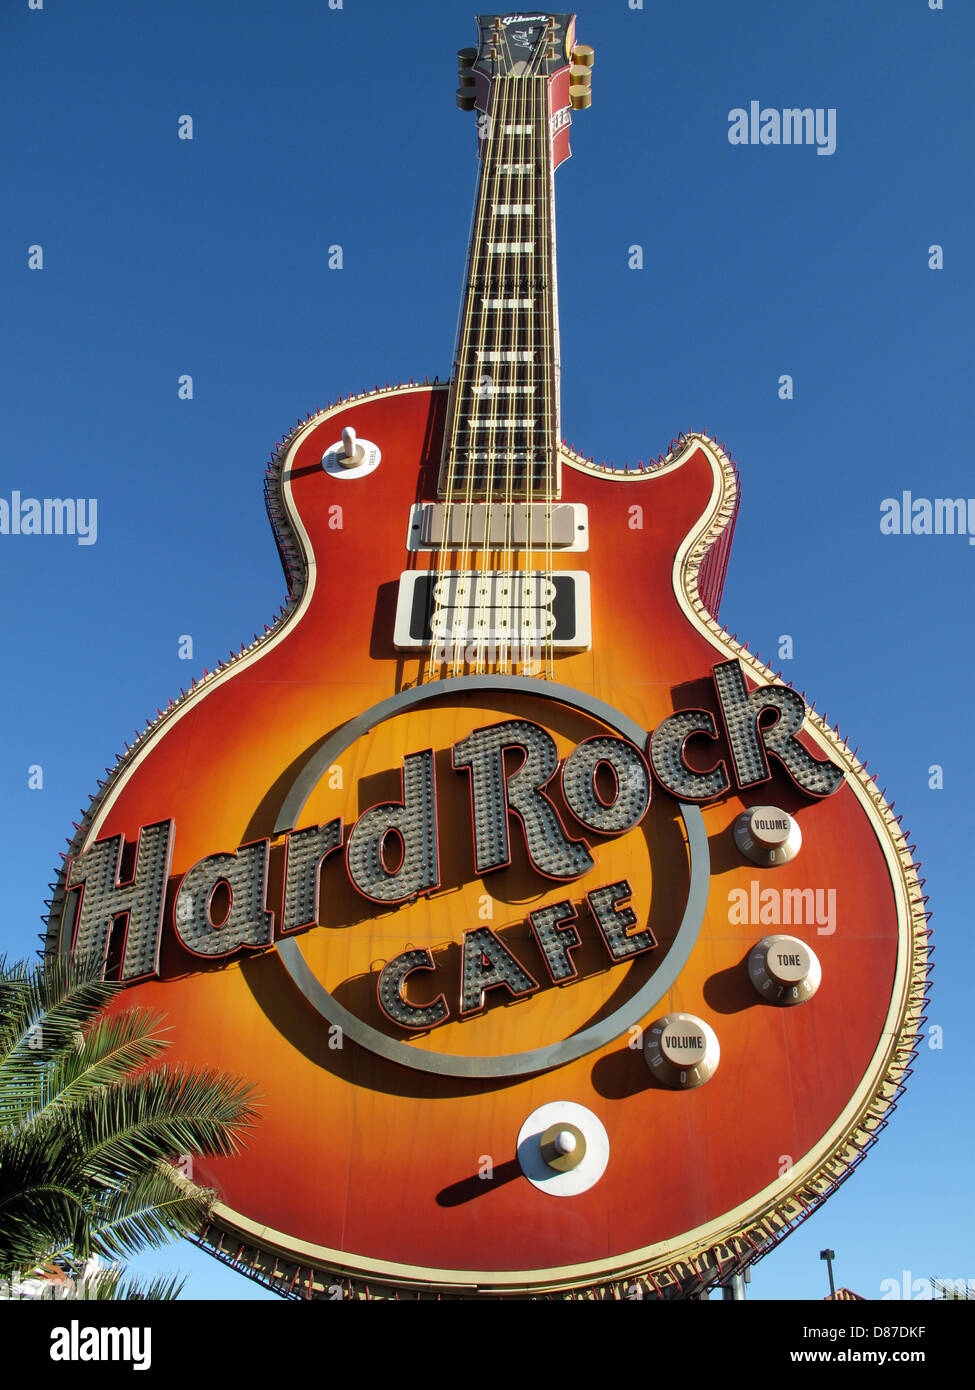 Hard Rock Cafe Gitarre in Las Vegas Stockfotografie - Alamy